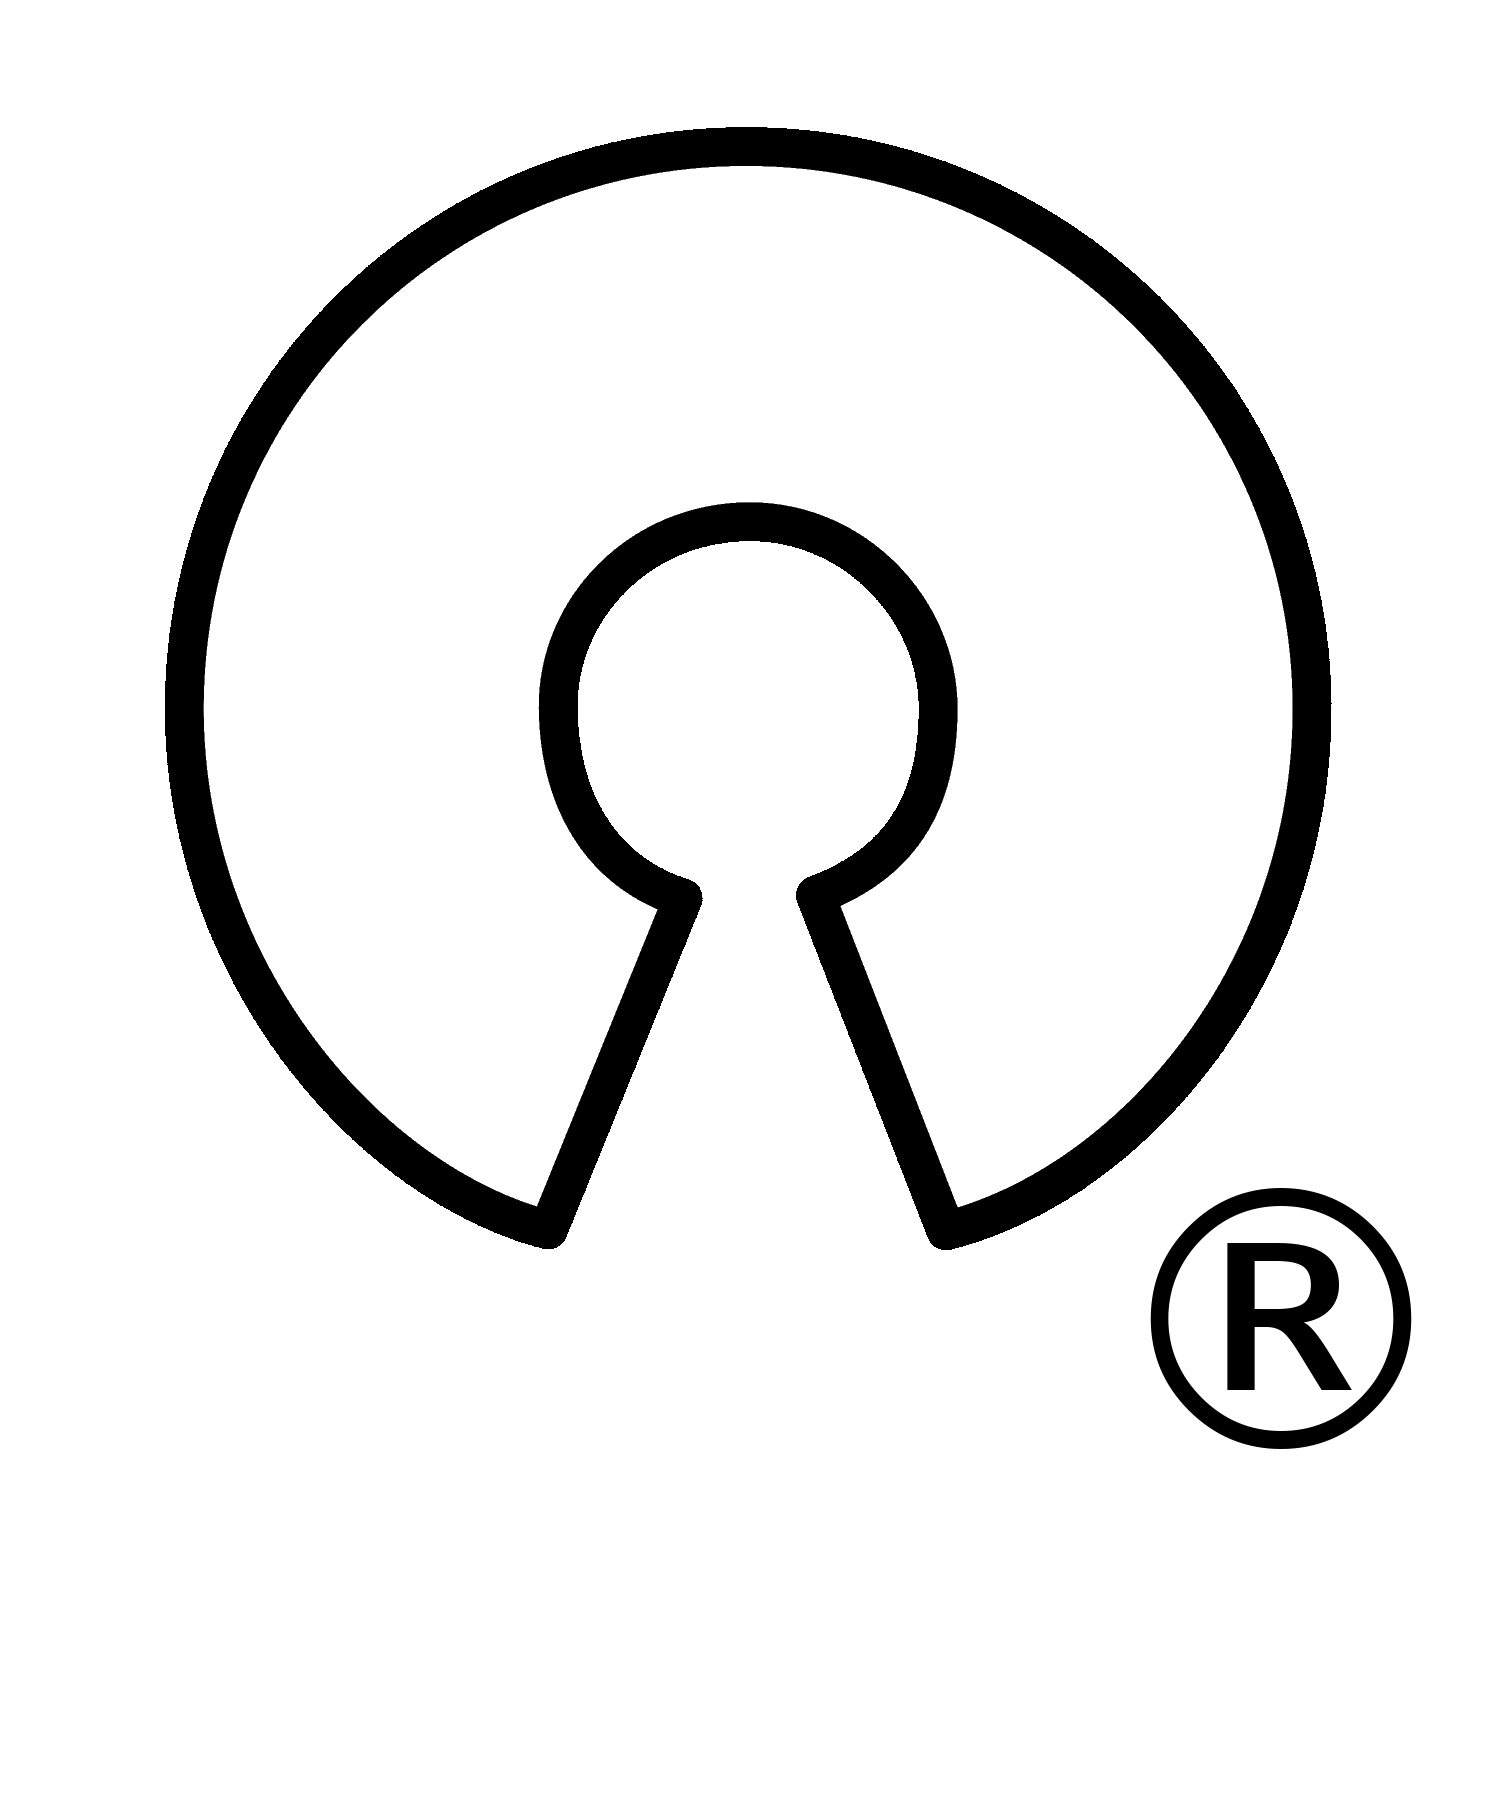 OSI logo 